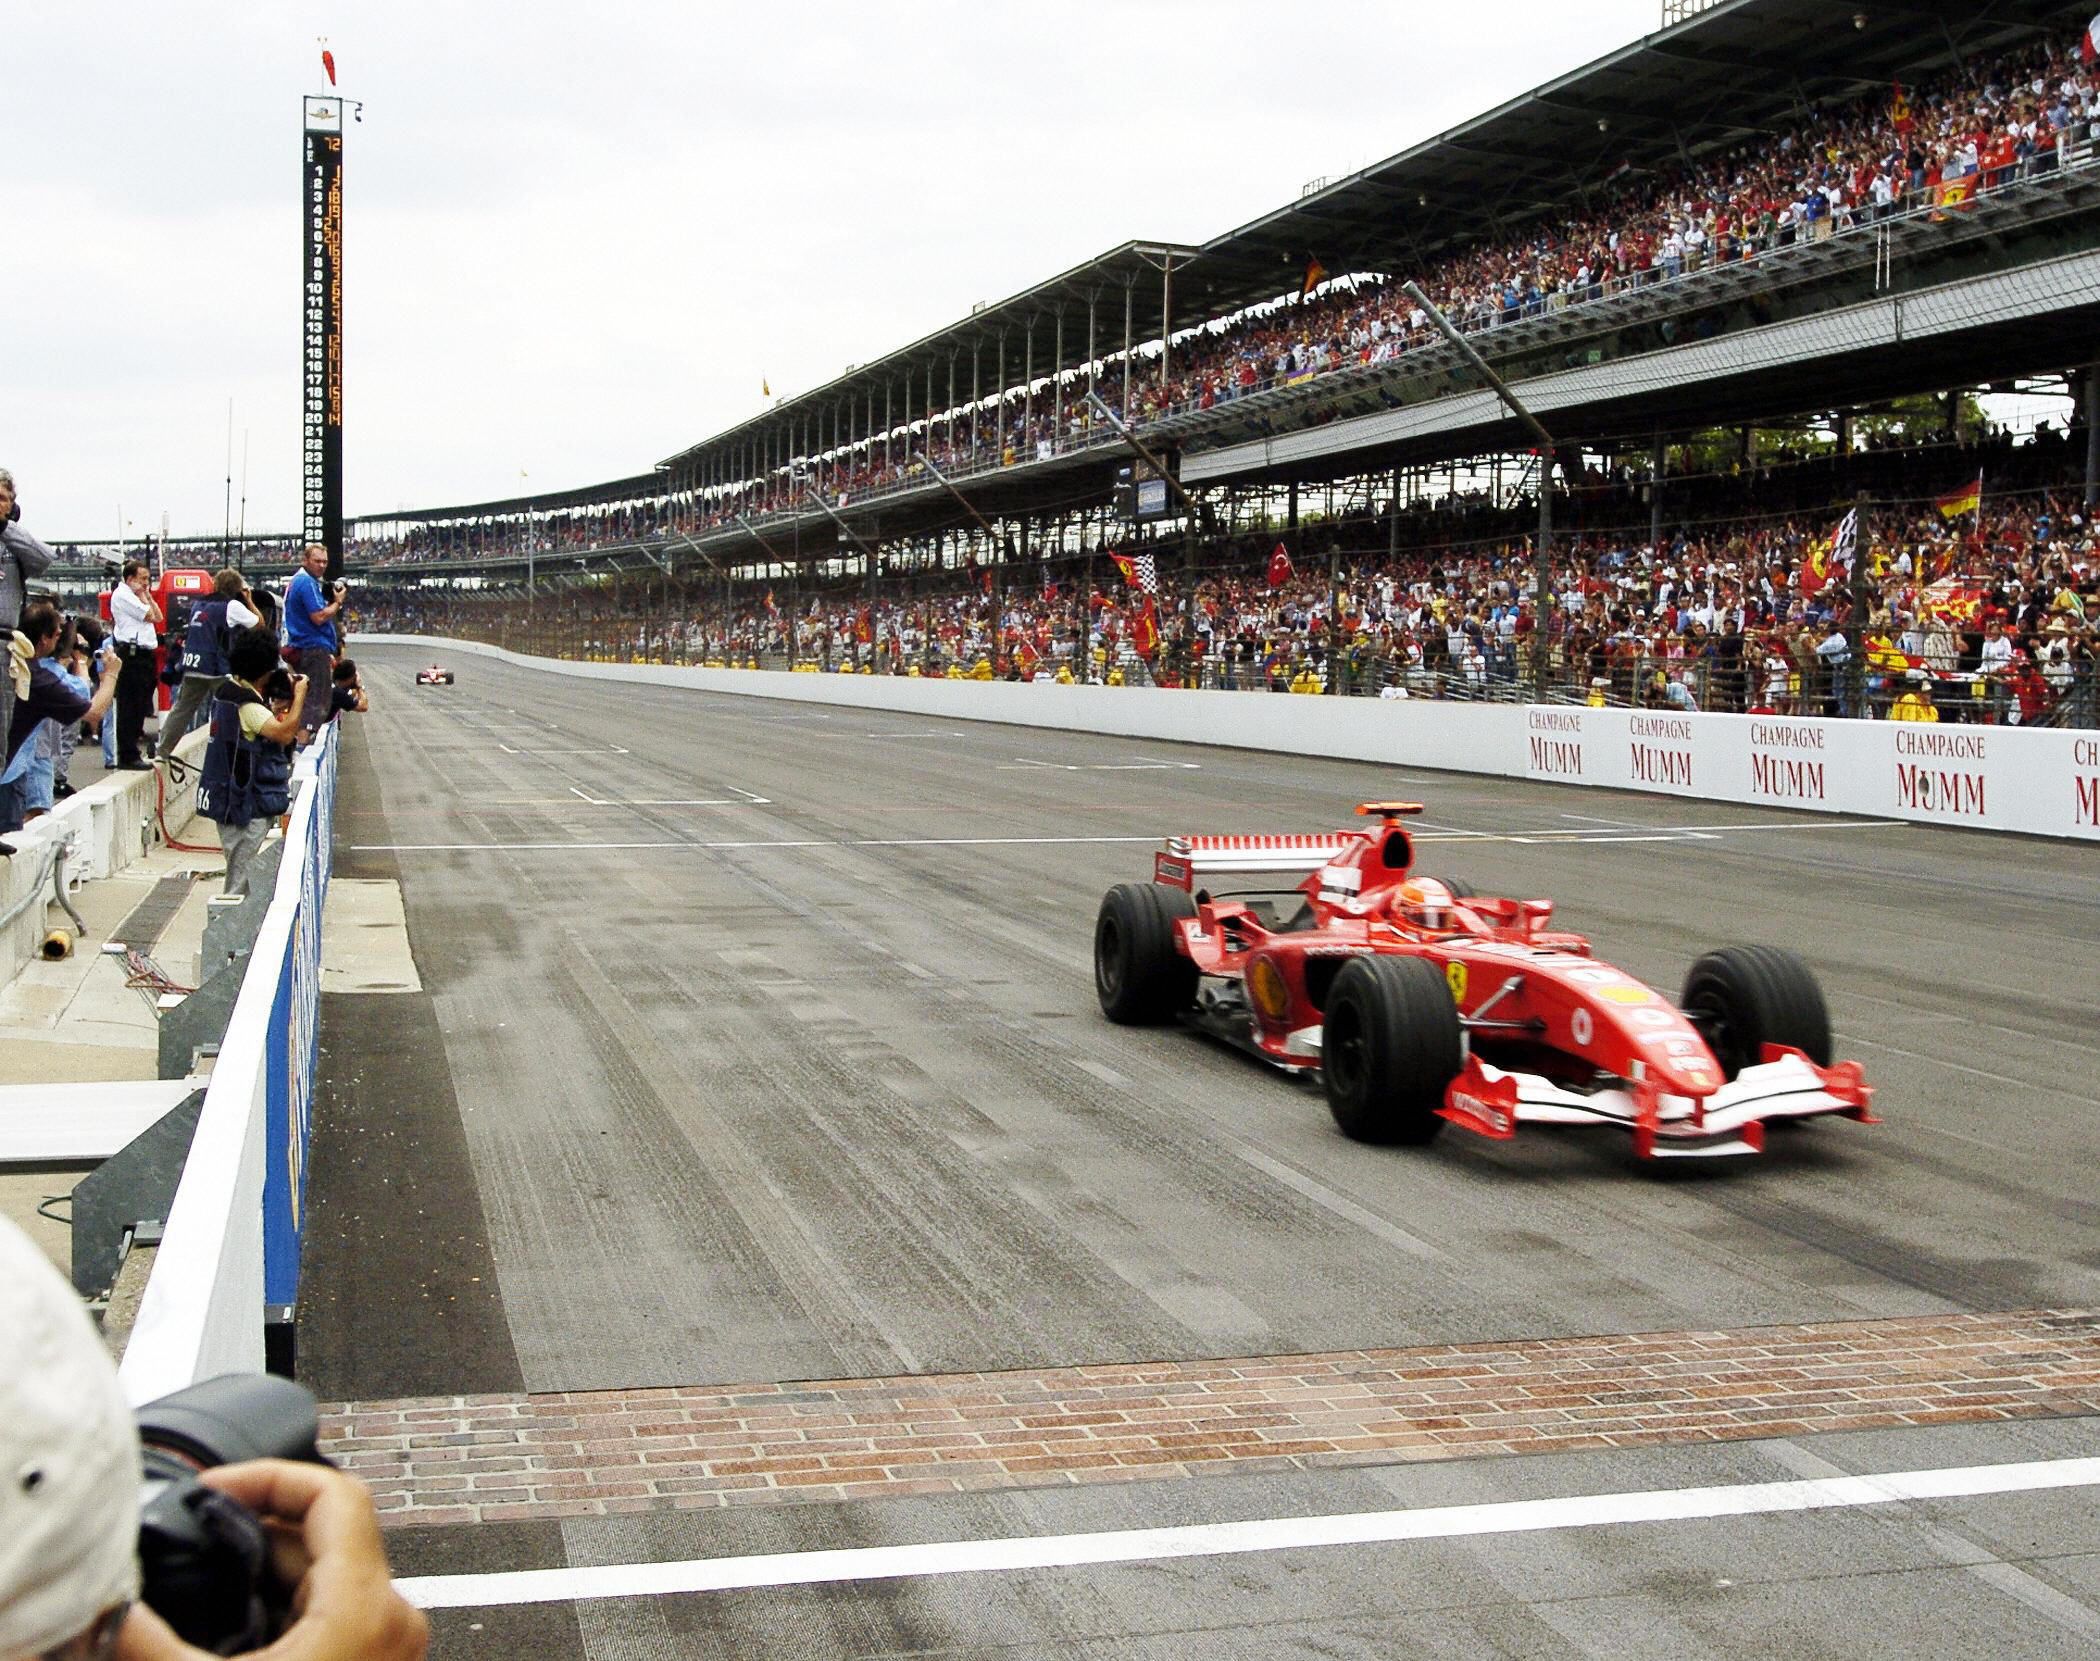 Формула 1 2005. Индианаполис 2002 формула 1. Индианаполис трасса ф1. Формула 1 2005 Михаэль Шумахер. Ф1 2004 Шумахер Индианаполис.